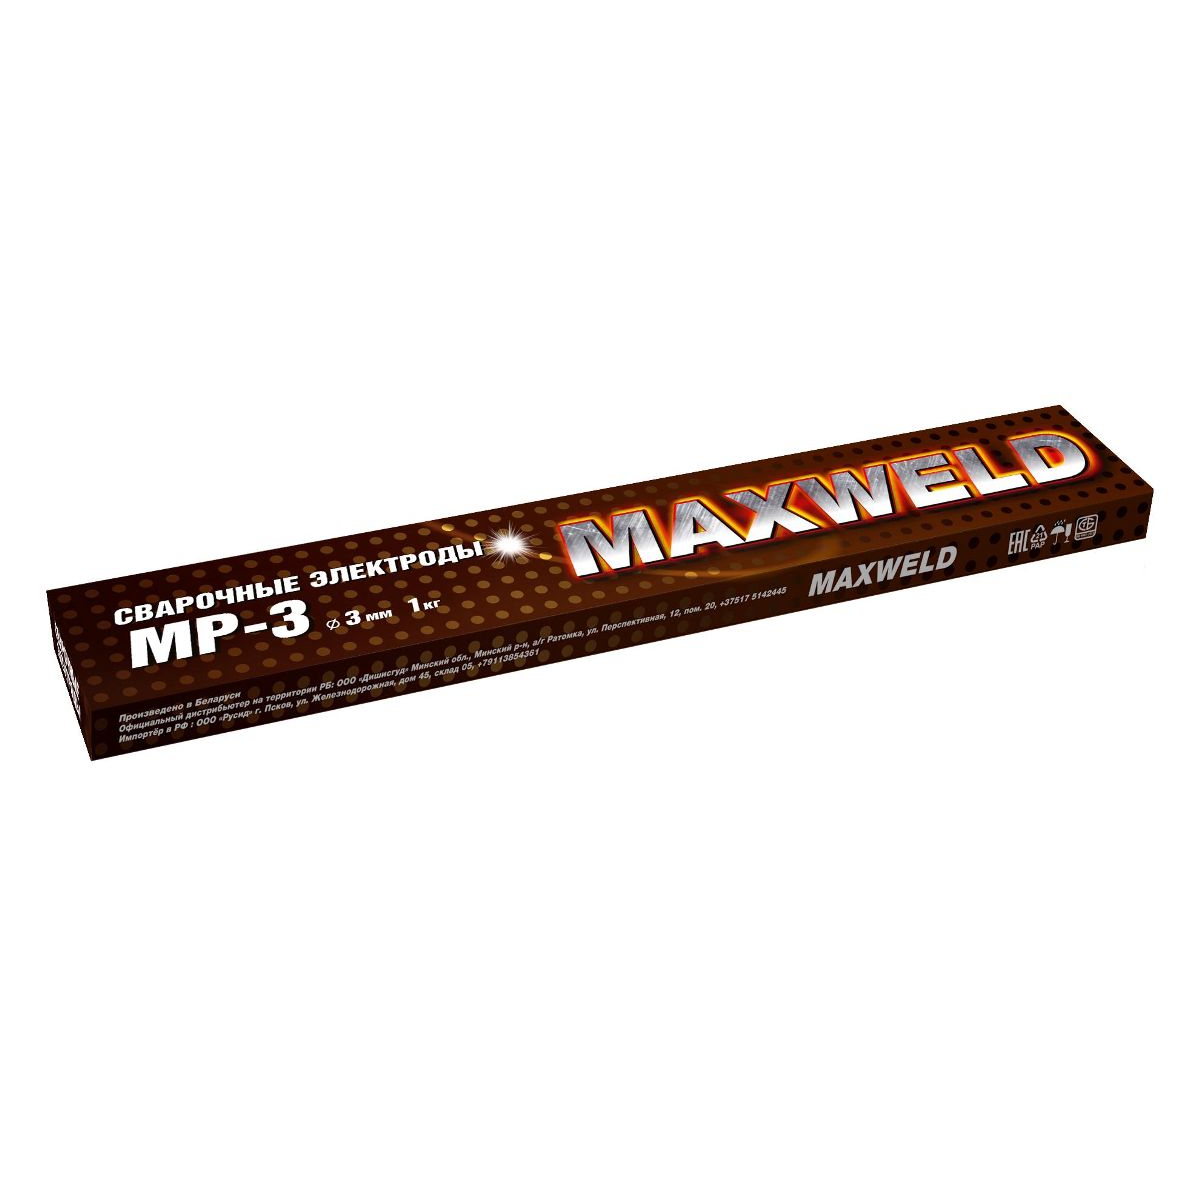 maxweld электроды сталь мр 3 2 5мм 1кг mr251 Электроды Maxweld СТАЛЬ МР-3 3мм, 1 кг